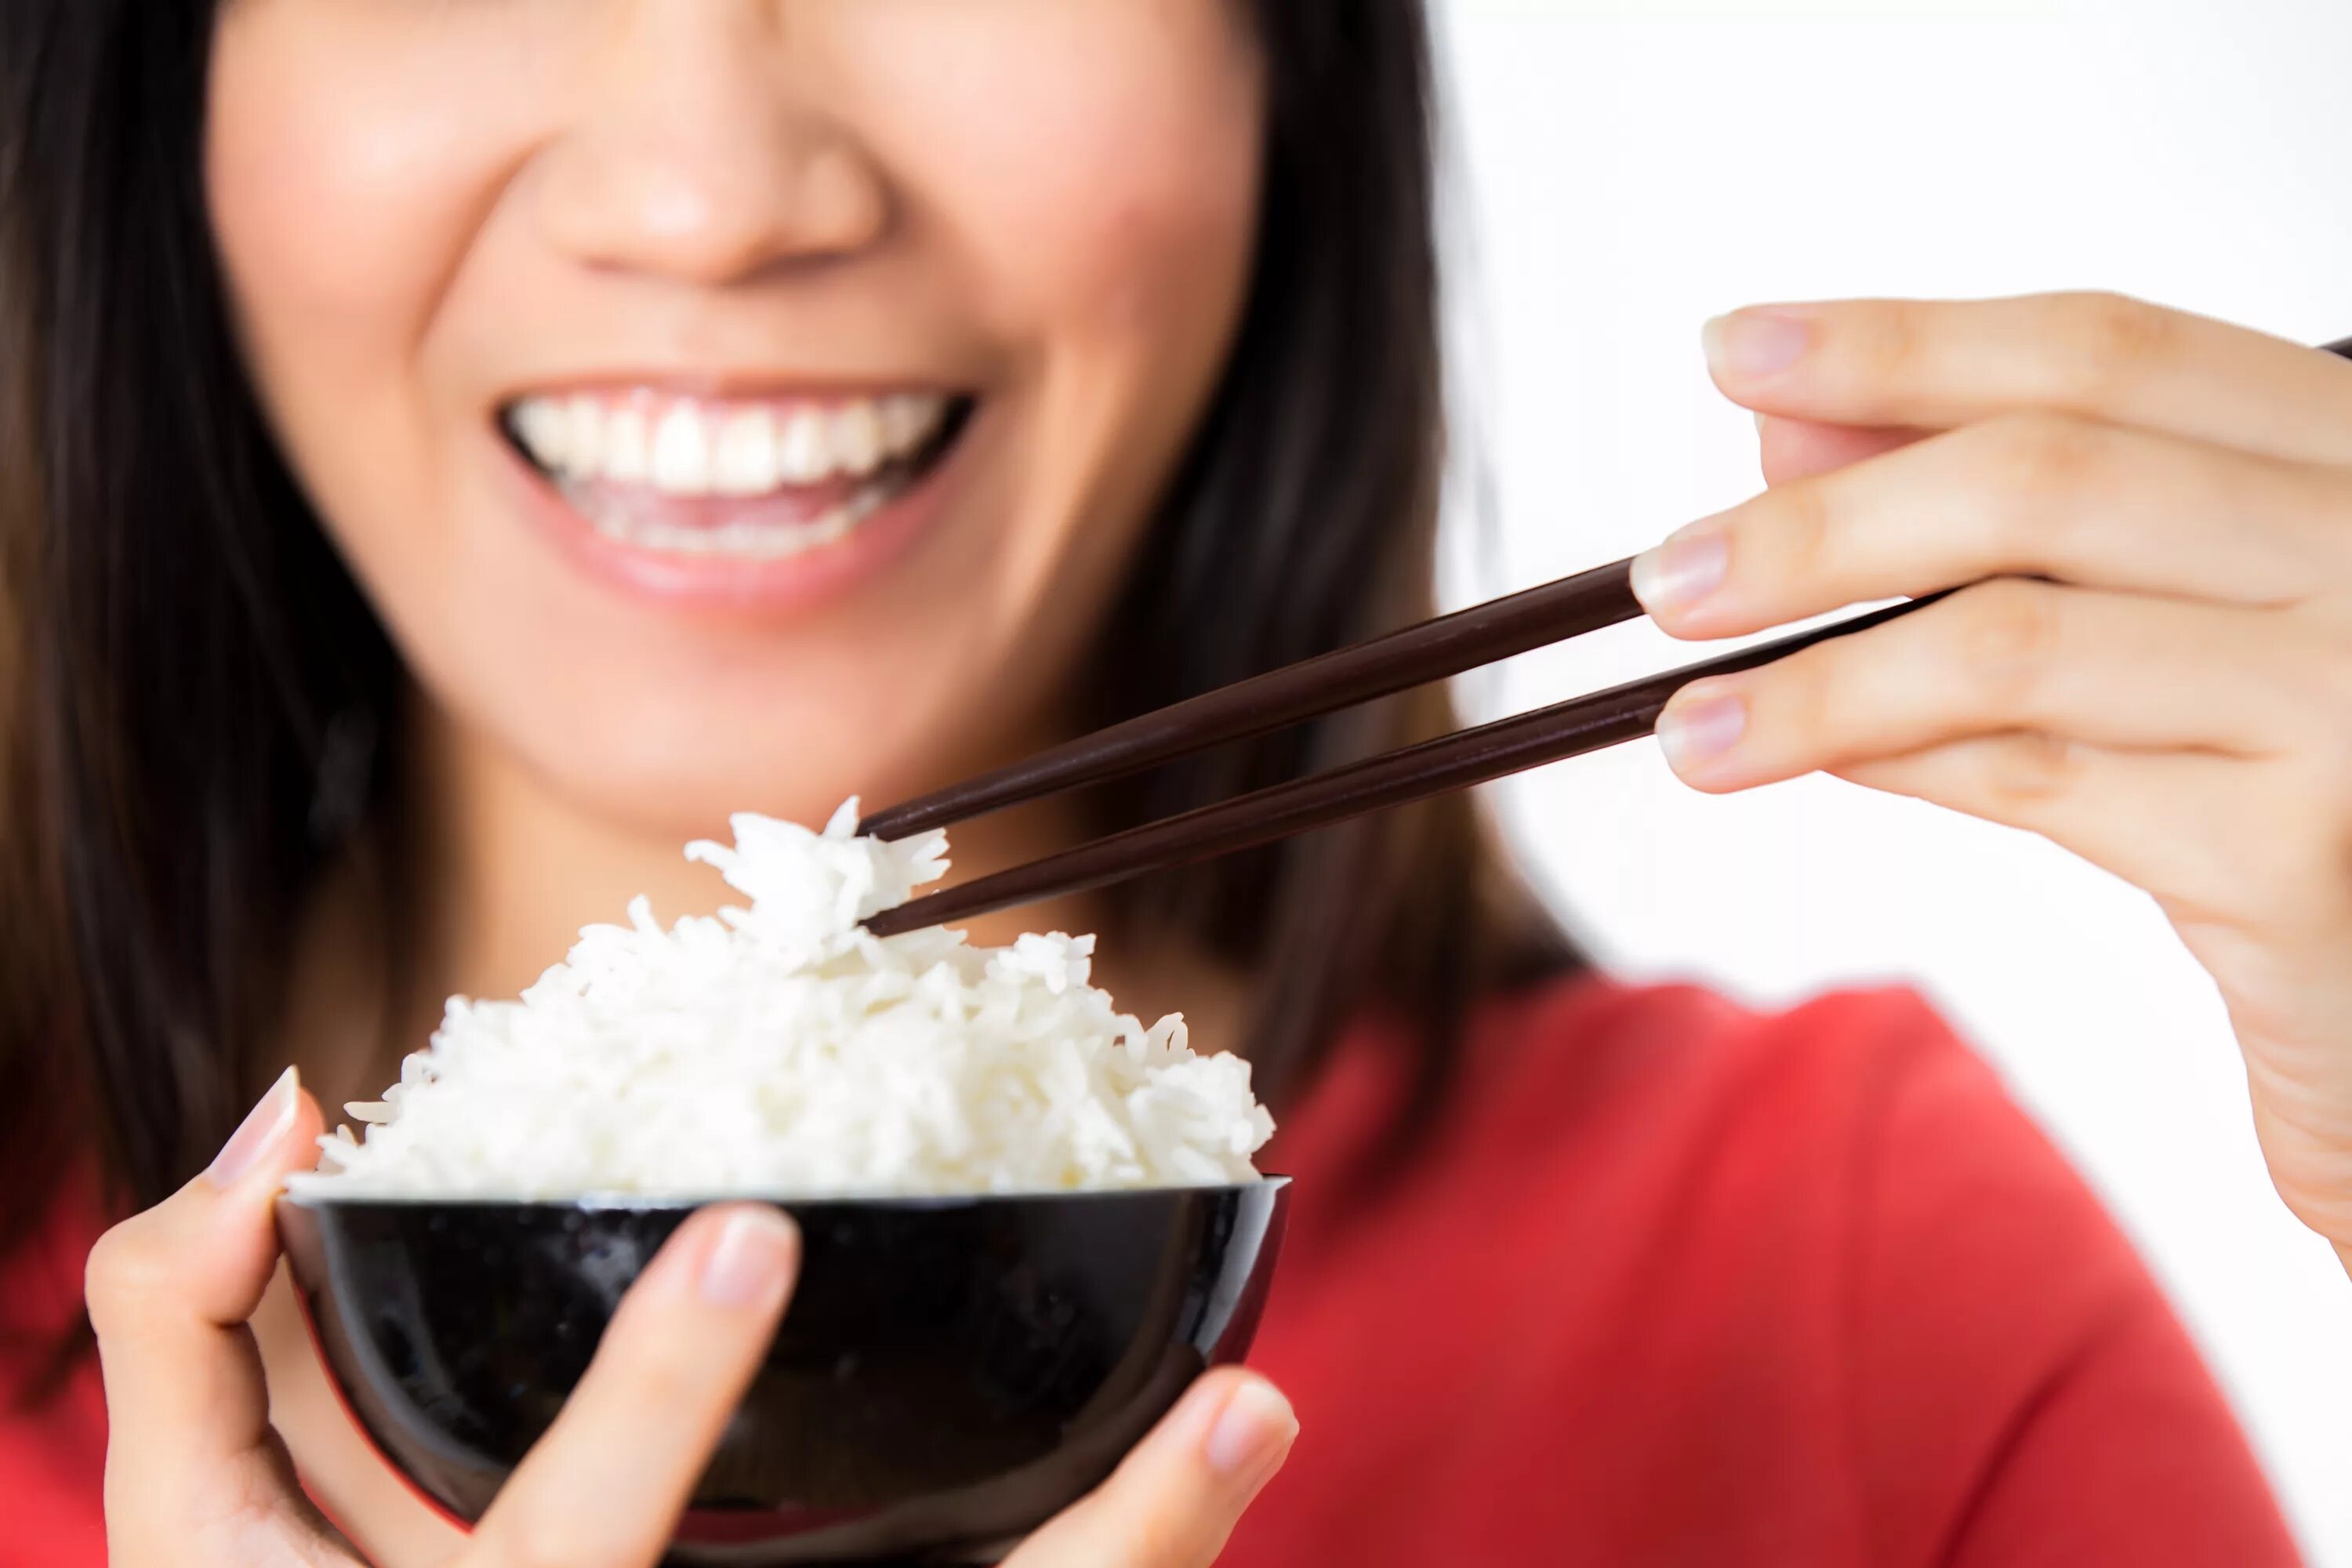 Девушка ест рис. Человек ест рис. Рис едят палочками. Китаец ест рис. Как едят рис палочками